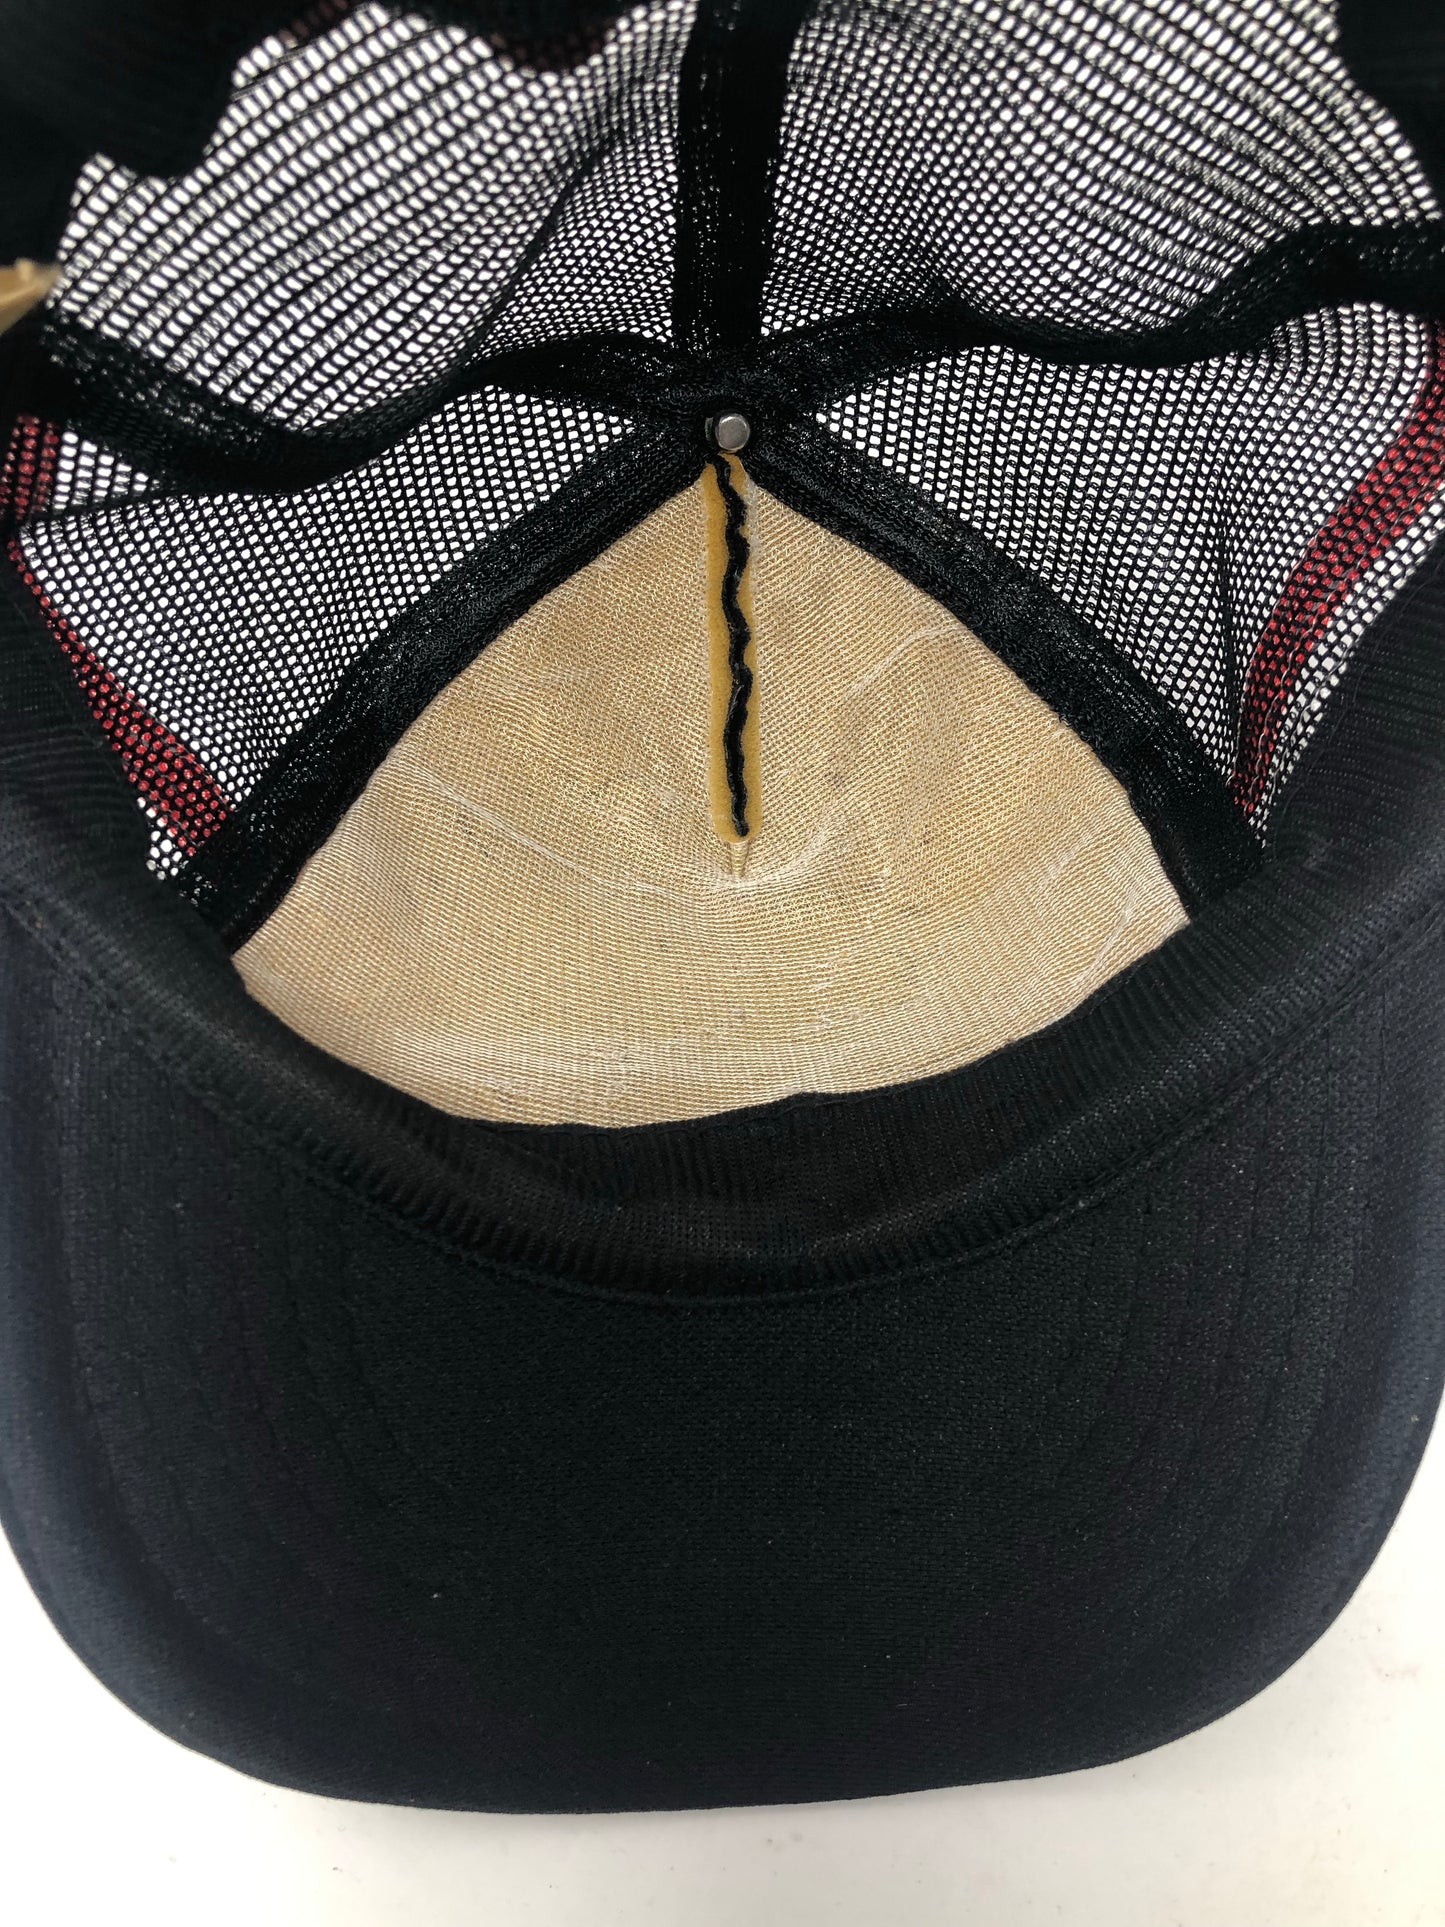 Load image into Gallery viewer, VTG Bachelors Detergents 3 Stripe Trucker Hat
